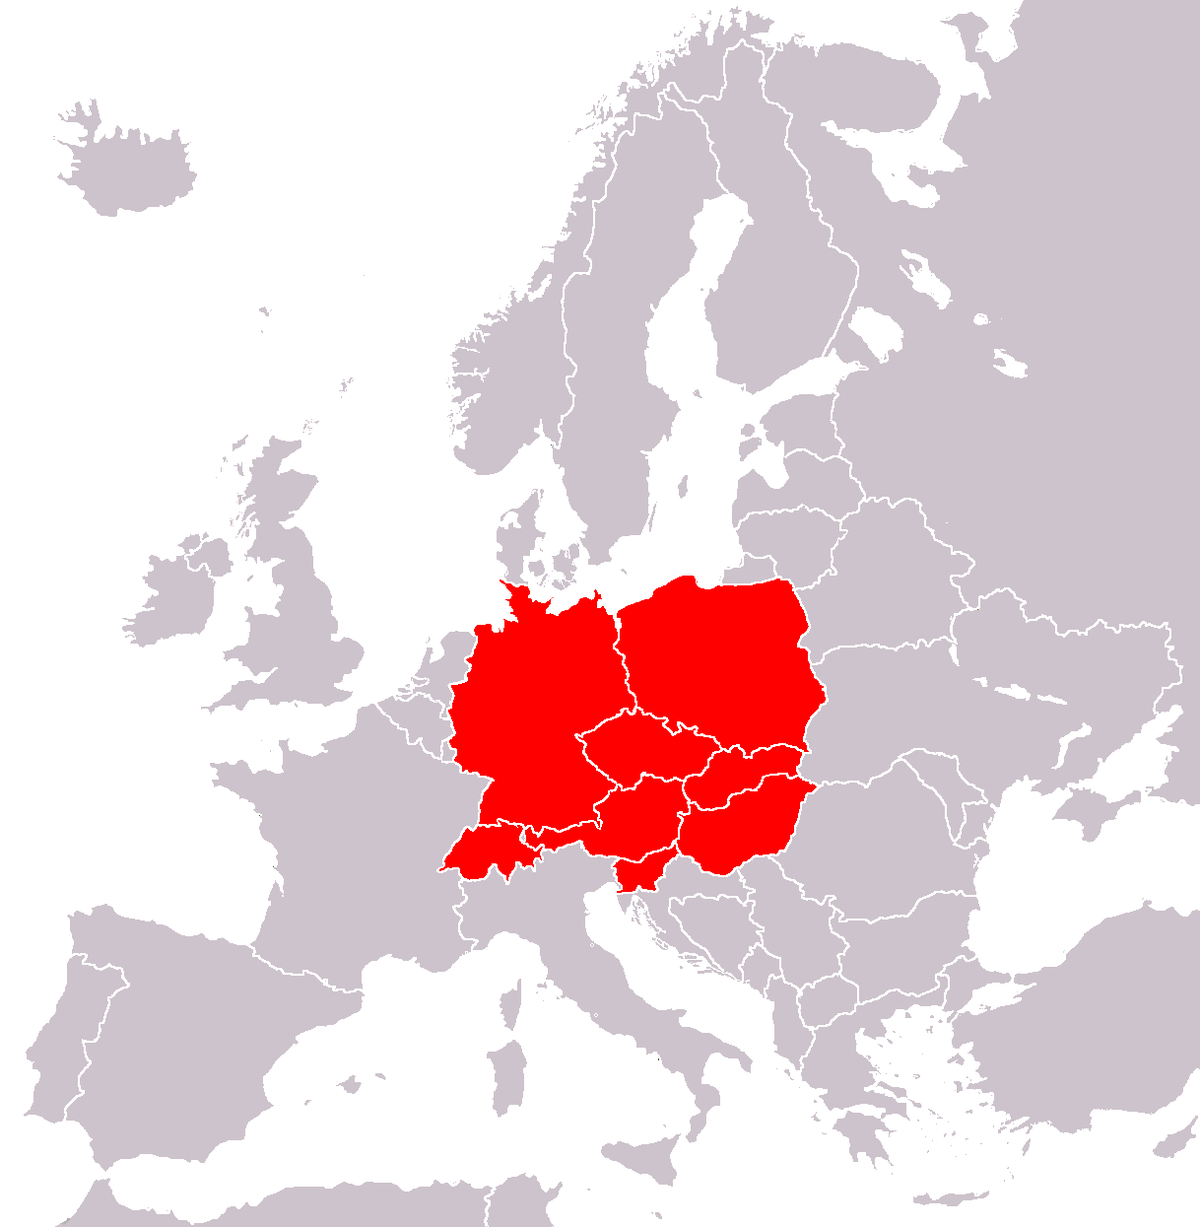 Центральная Европа. Карта центральной Европы. Восточная Европа. Страны центральной Европы.